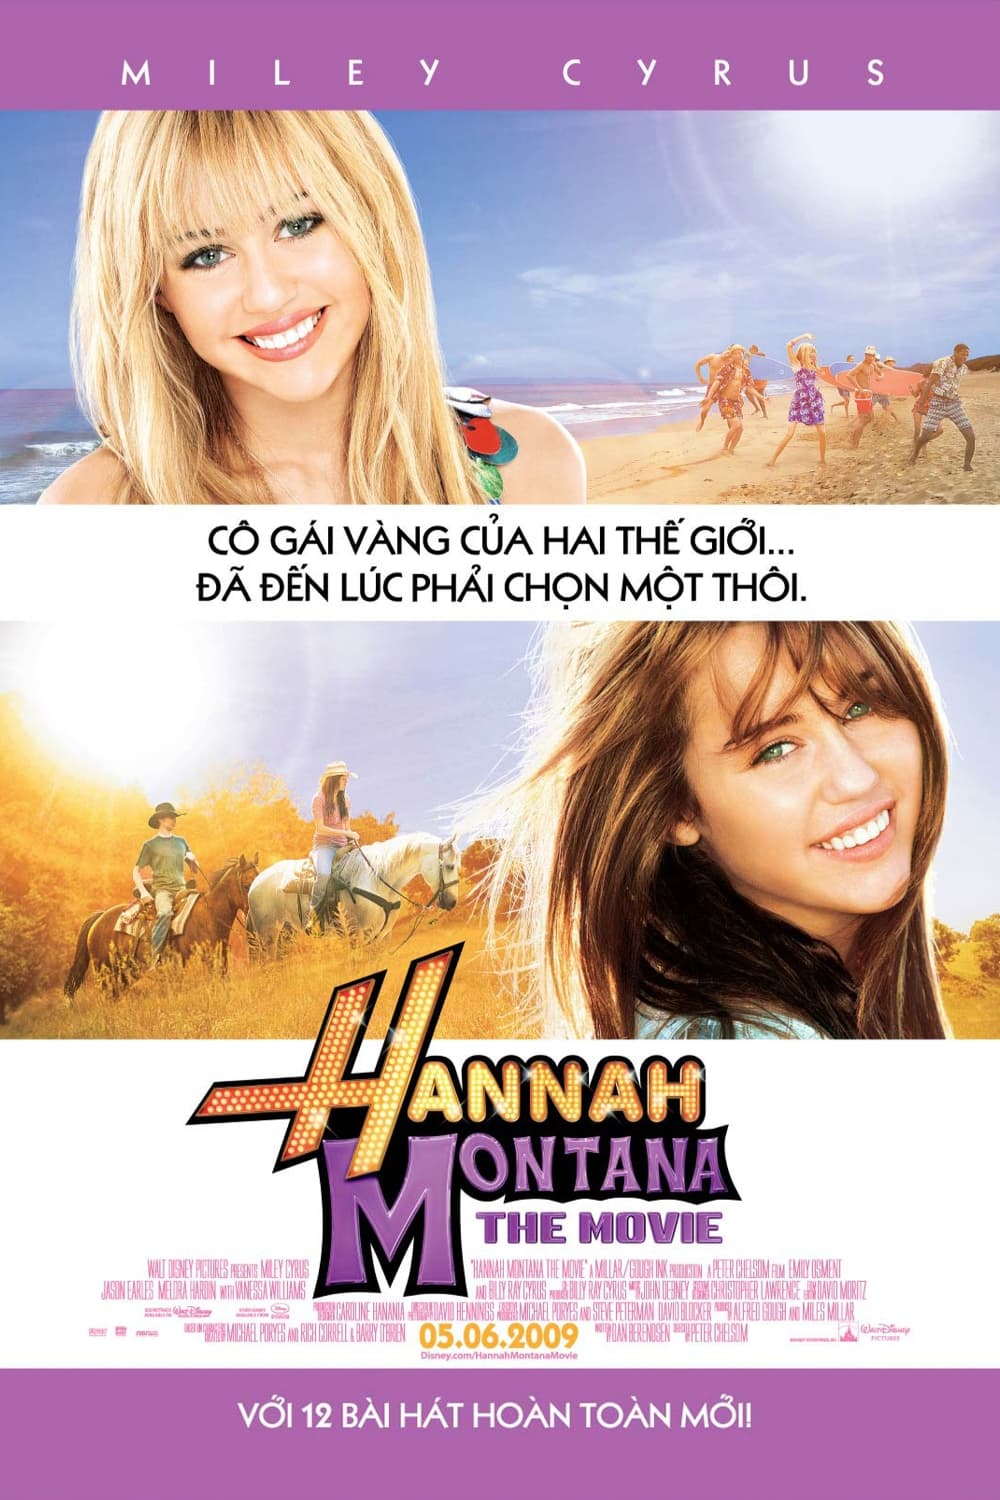 Hannah Montana: The Movie (Hannah Montana: The Movie) [2009]